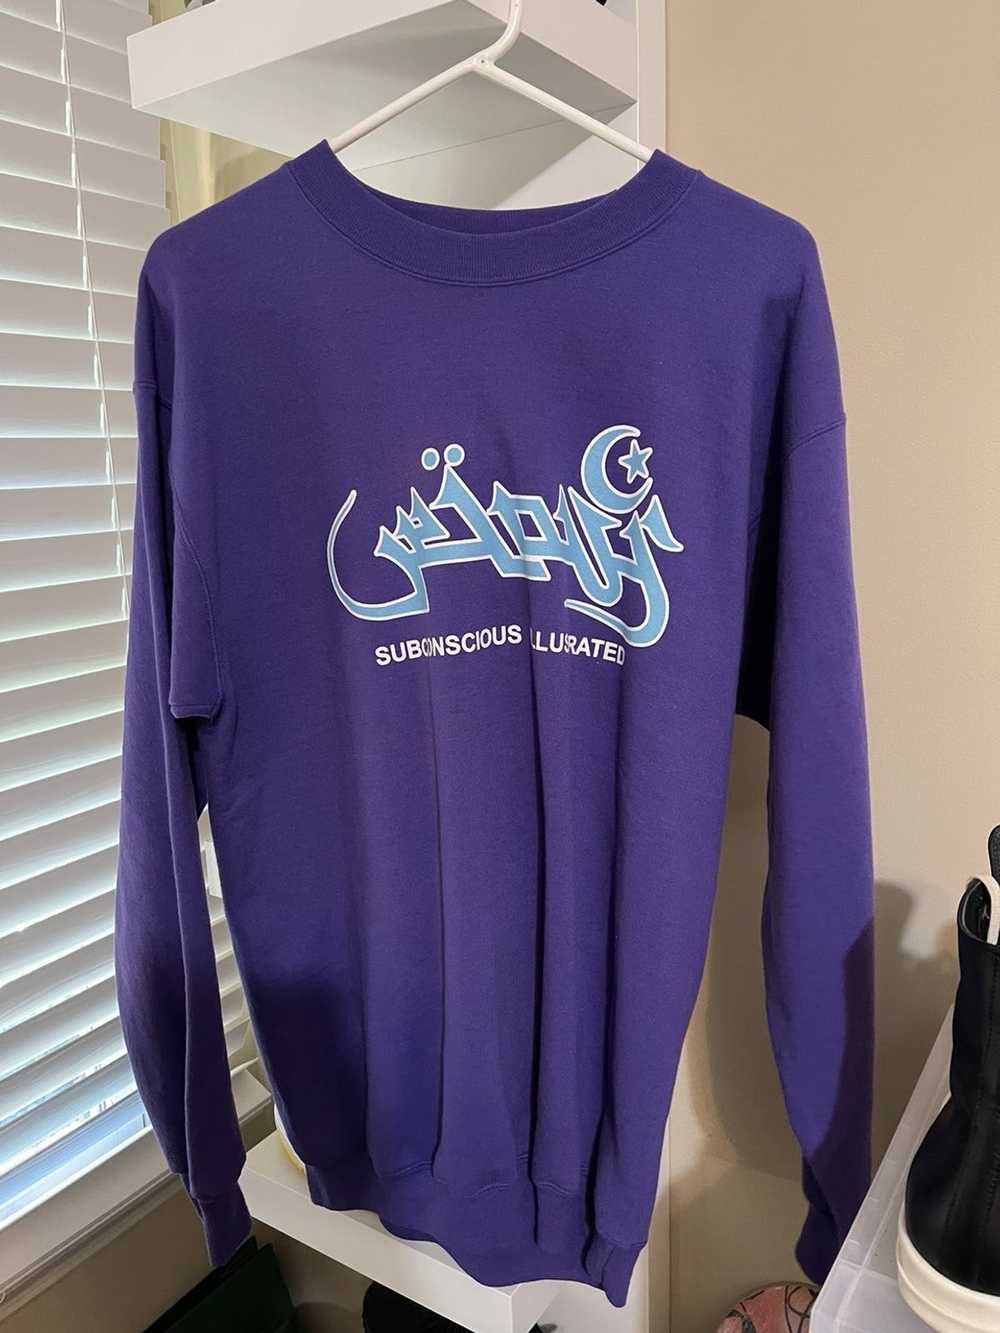 Velour velour scars purple sweatshirt - image 1